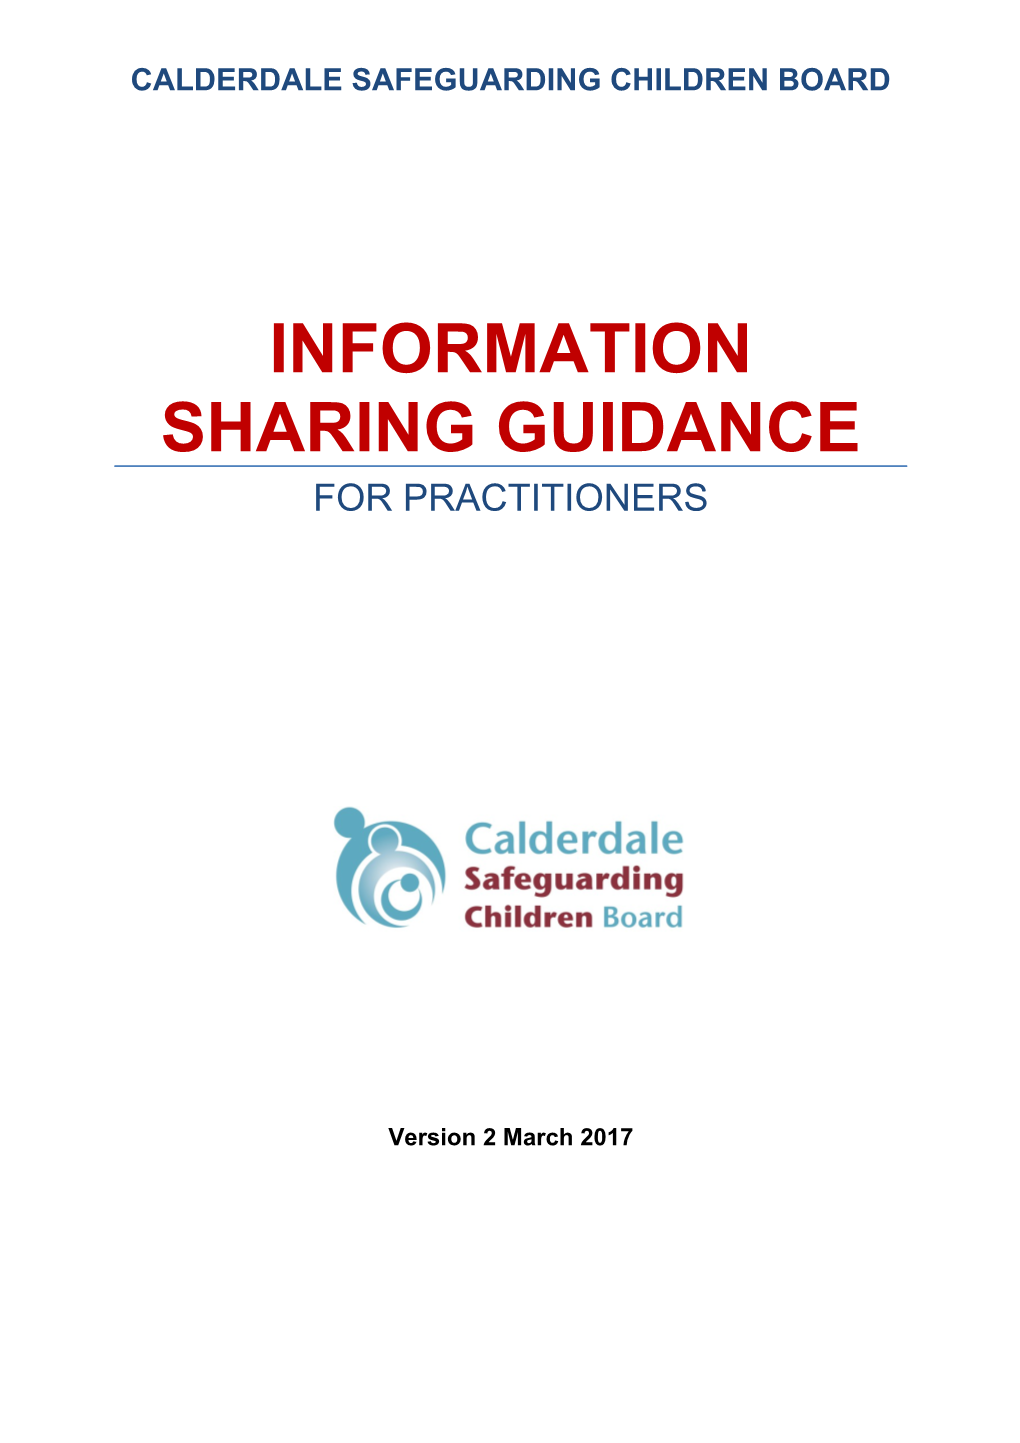 Information Sharing Guidance